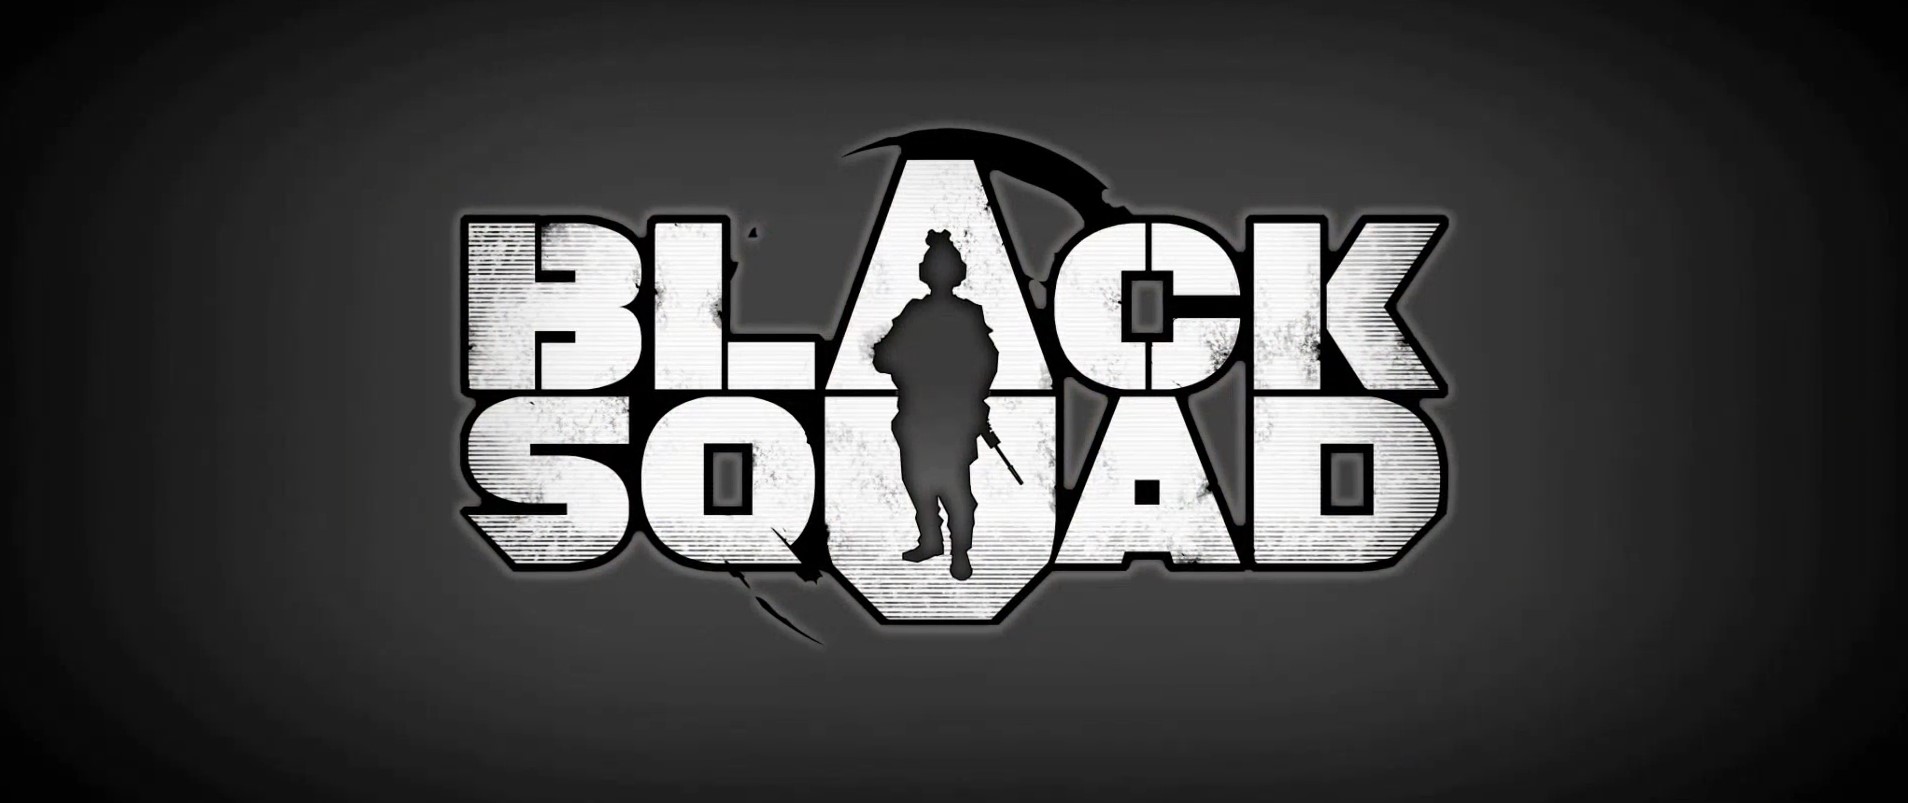 black squad free download mac